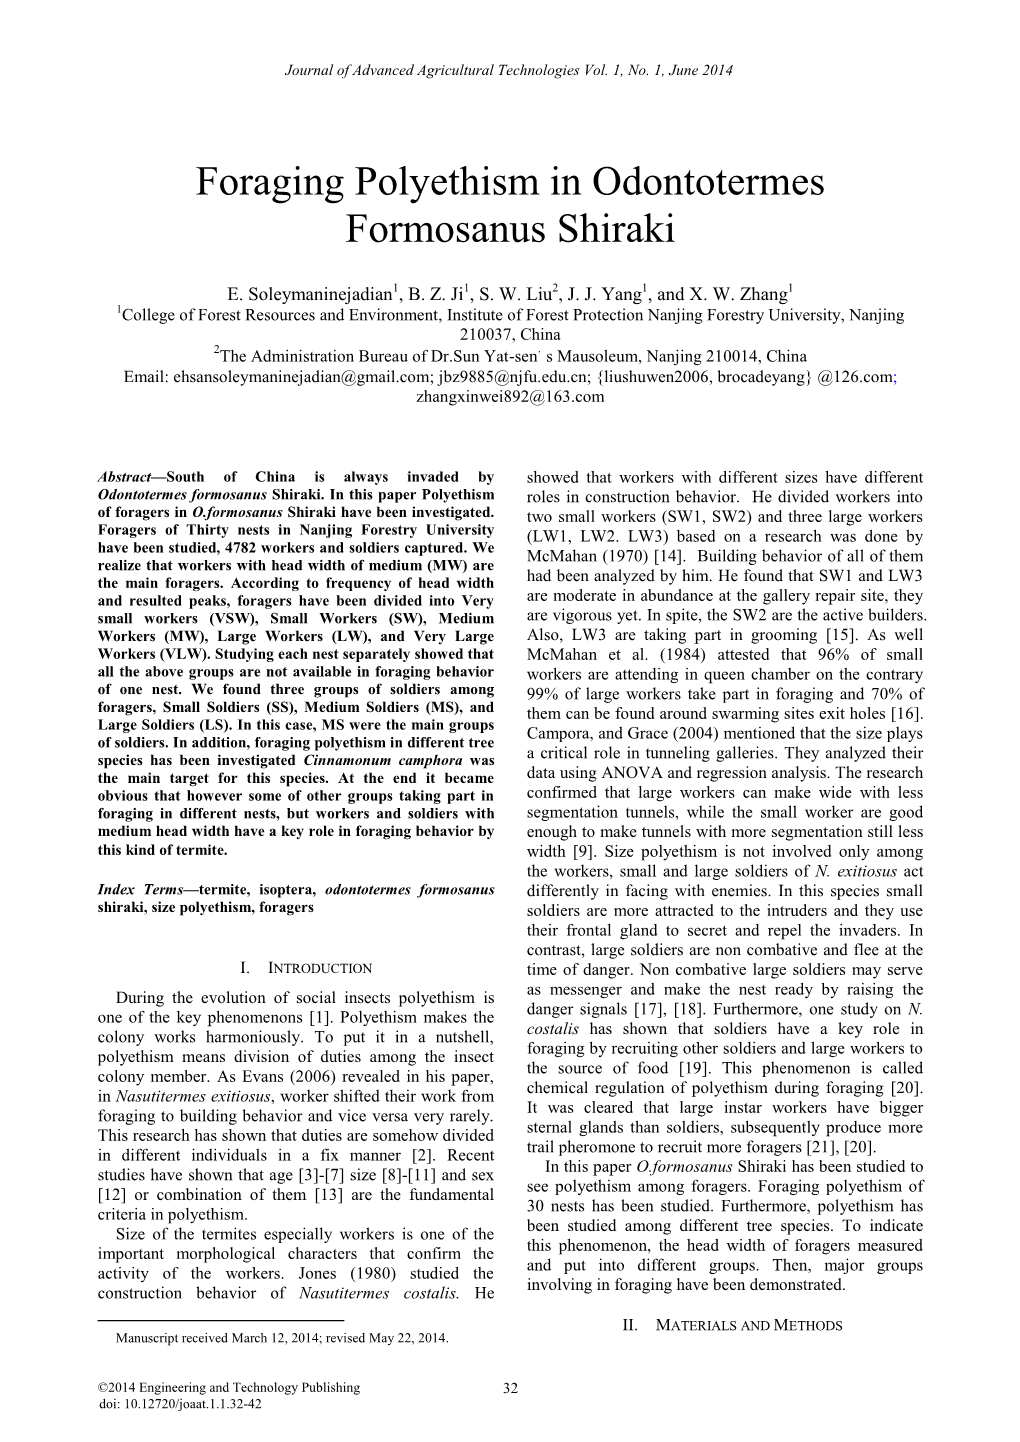 Foraging Polyethism in Odontotermes Formosanus Shiraki